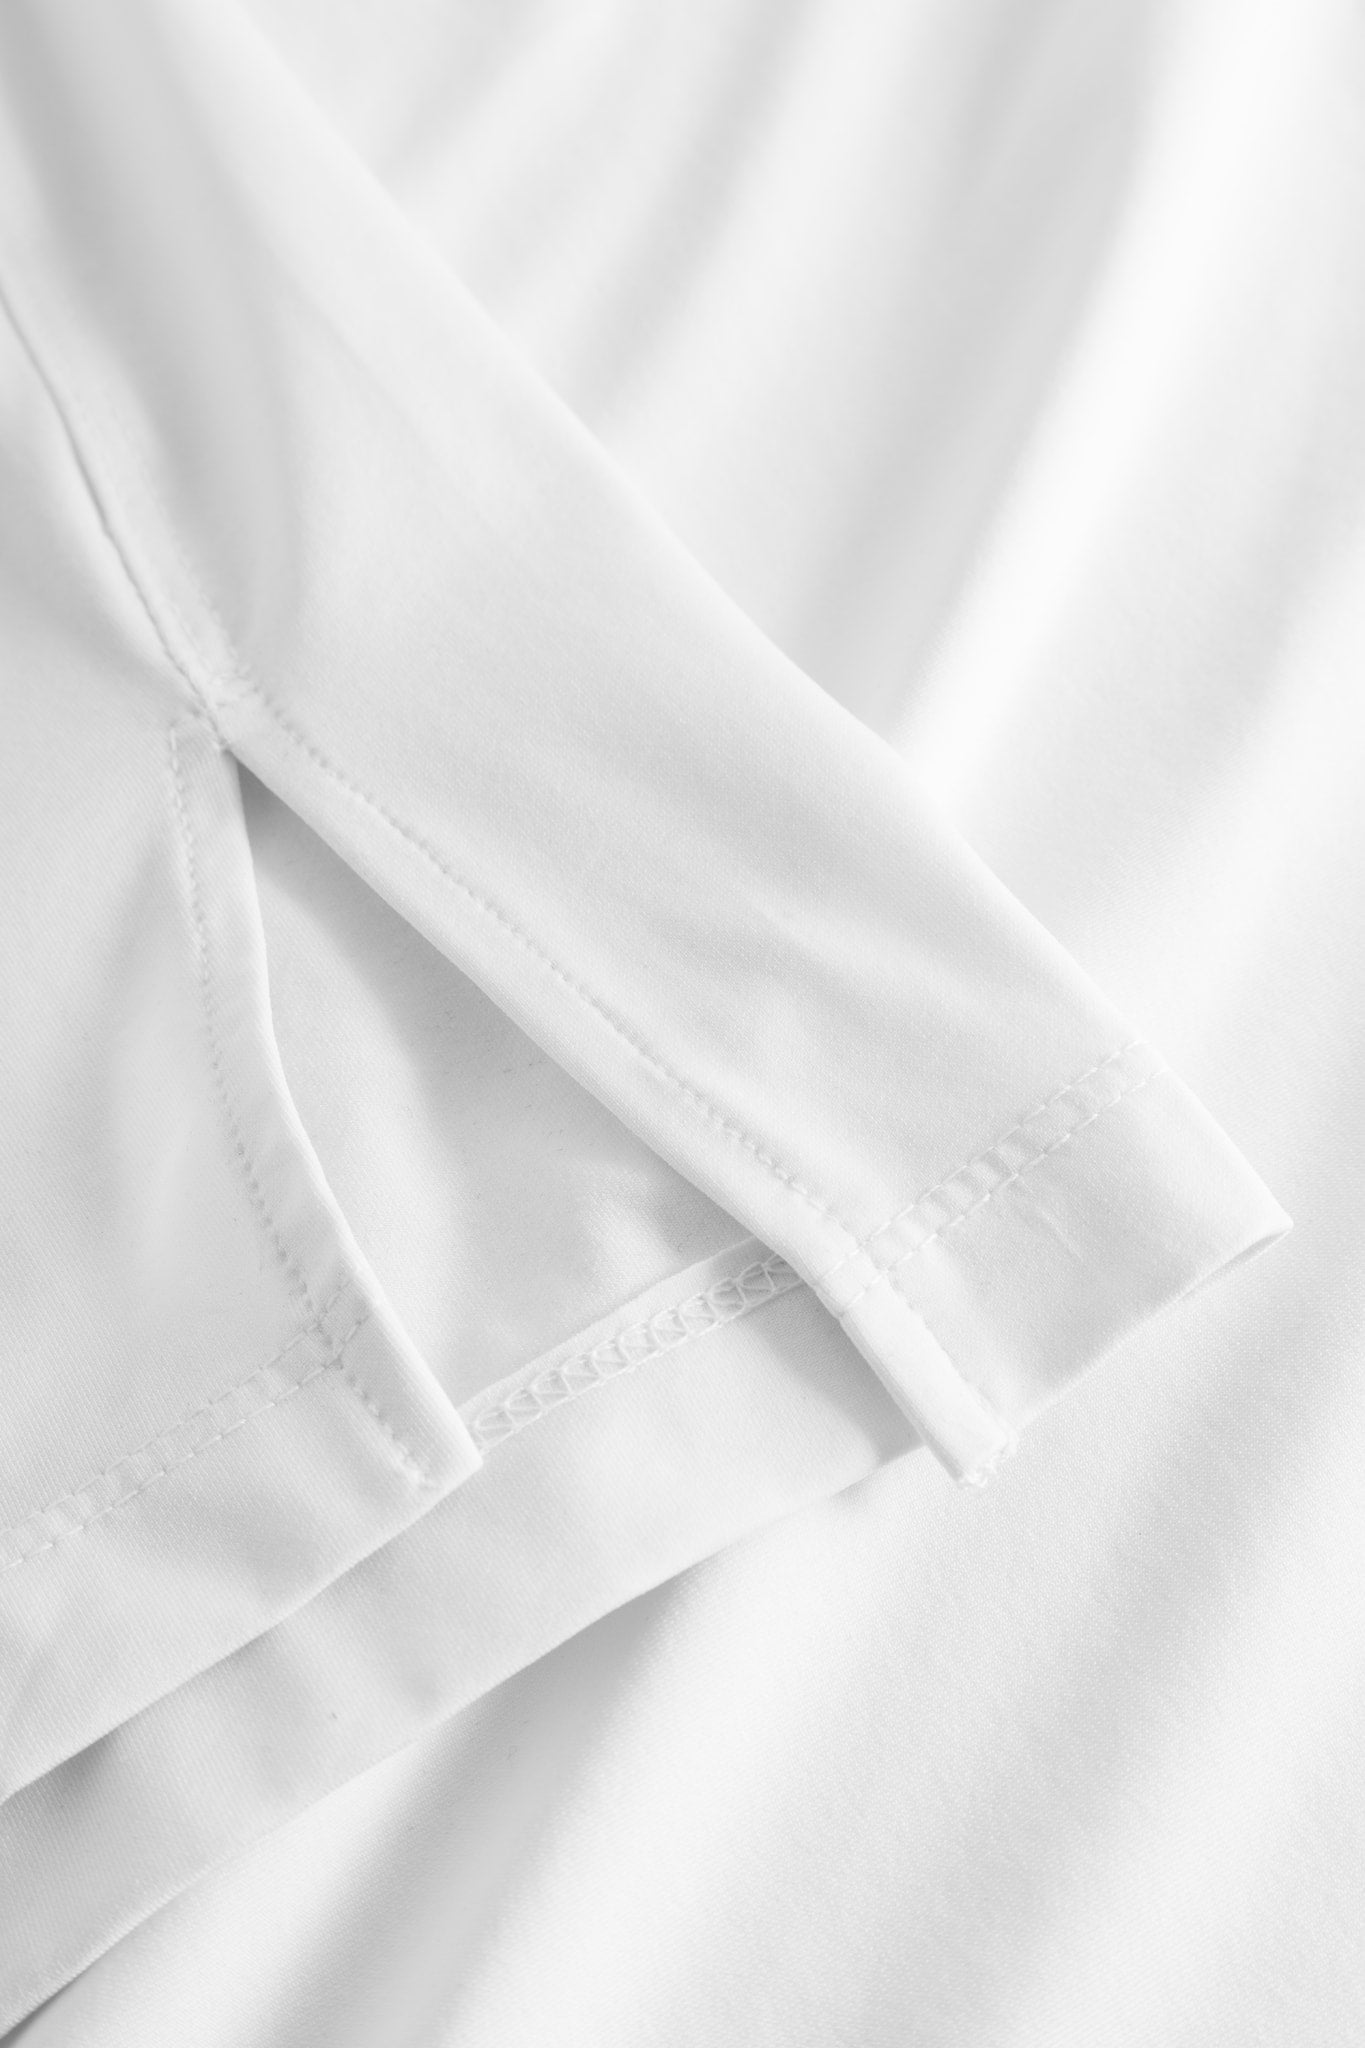 Oncourt Crop WPC  T-Shirt - White